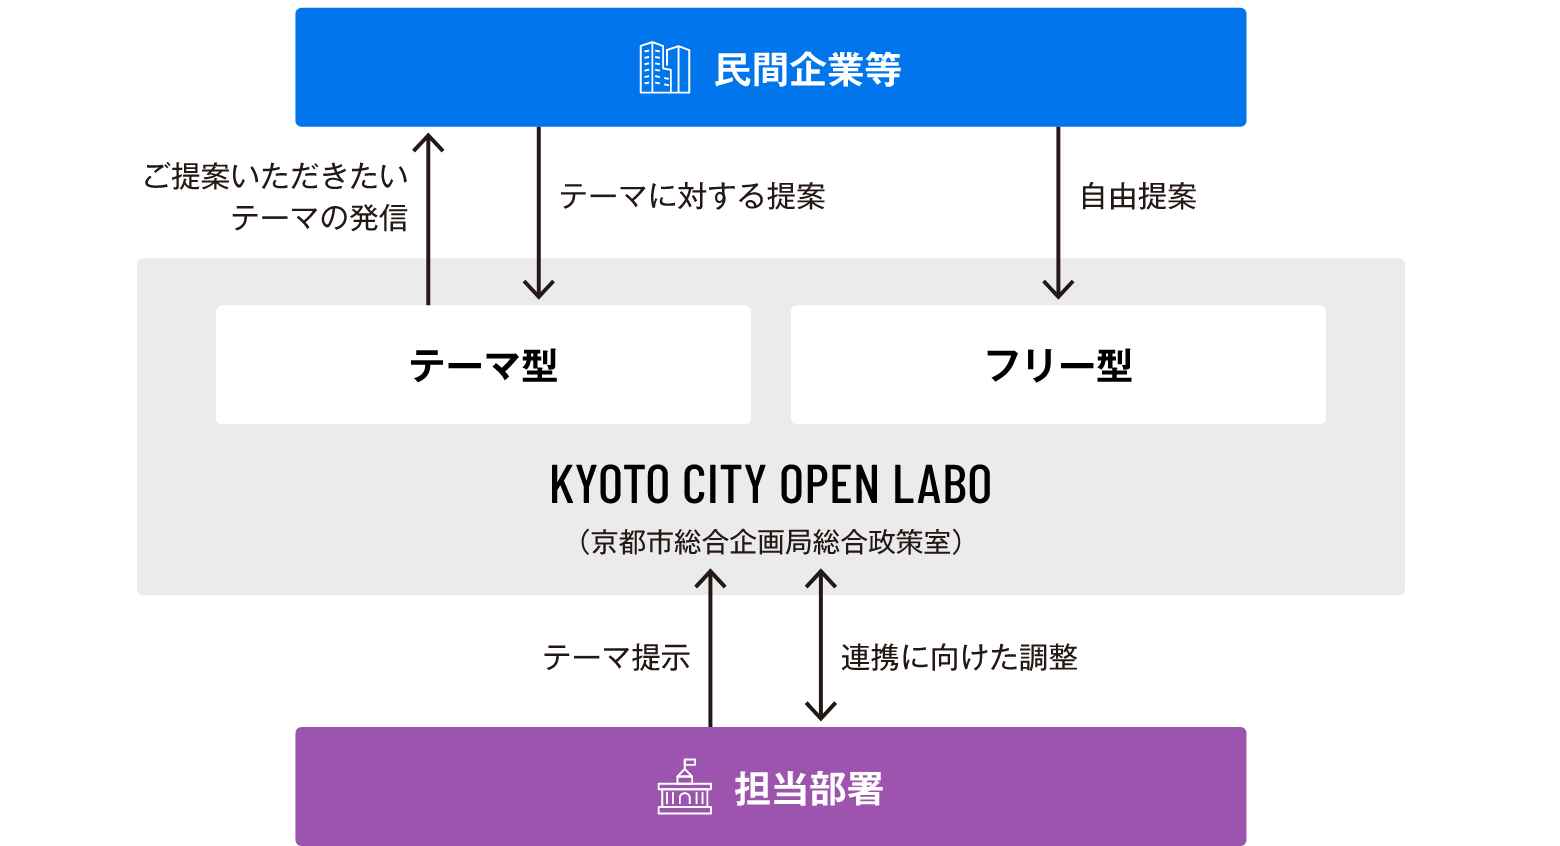 KYOTO CITY OPEN LABOのフロー図。担当部署が提示するテーマ型と、民間企業が提案するフリー型の課題を、京都市総合企画局総合政策室がKYOTO CITY OPEN LABOとして仲介する。